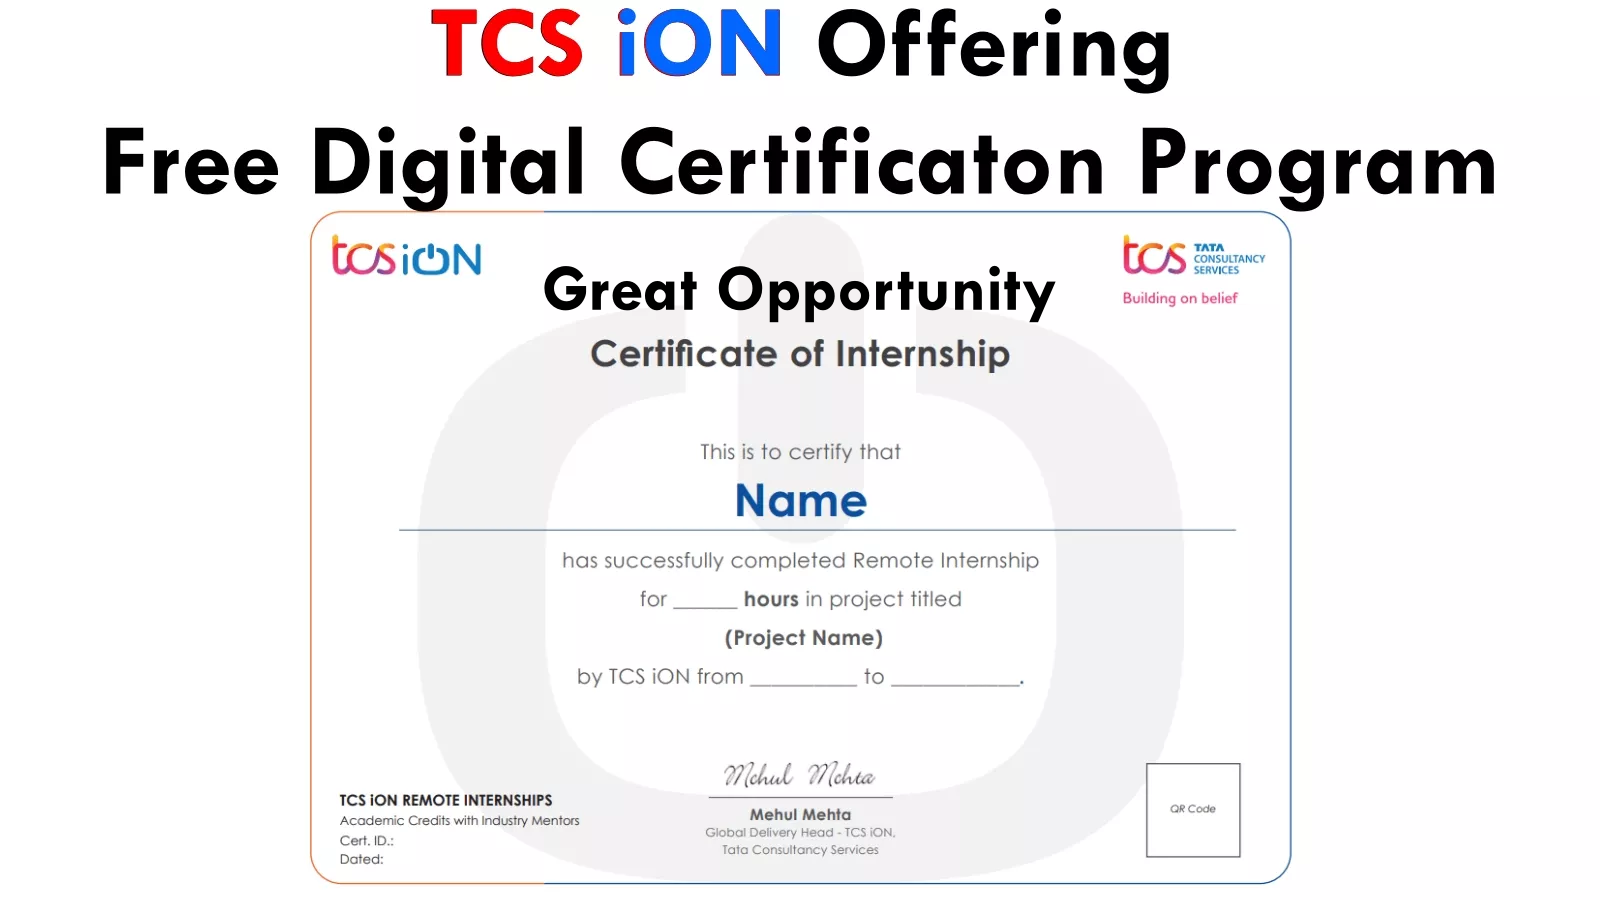 TCS iON Offering 15 Days Free Digital Certification Program